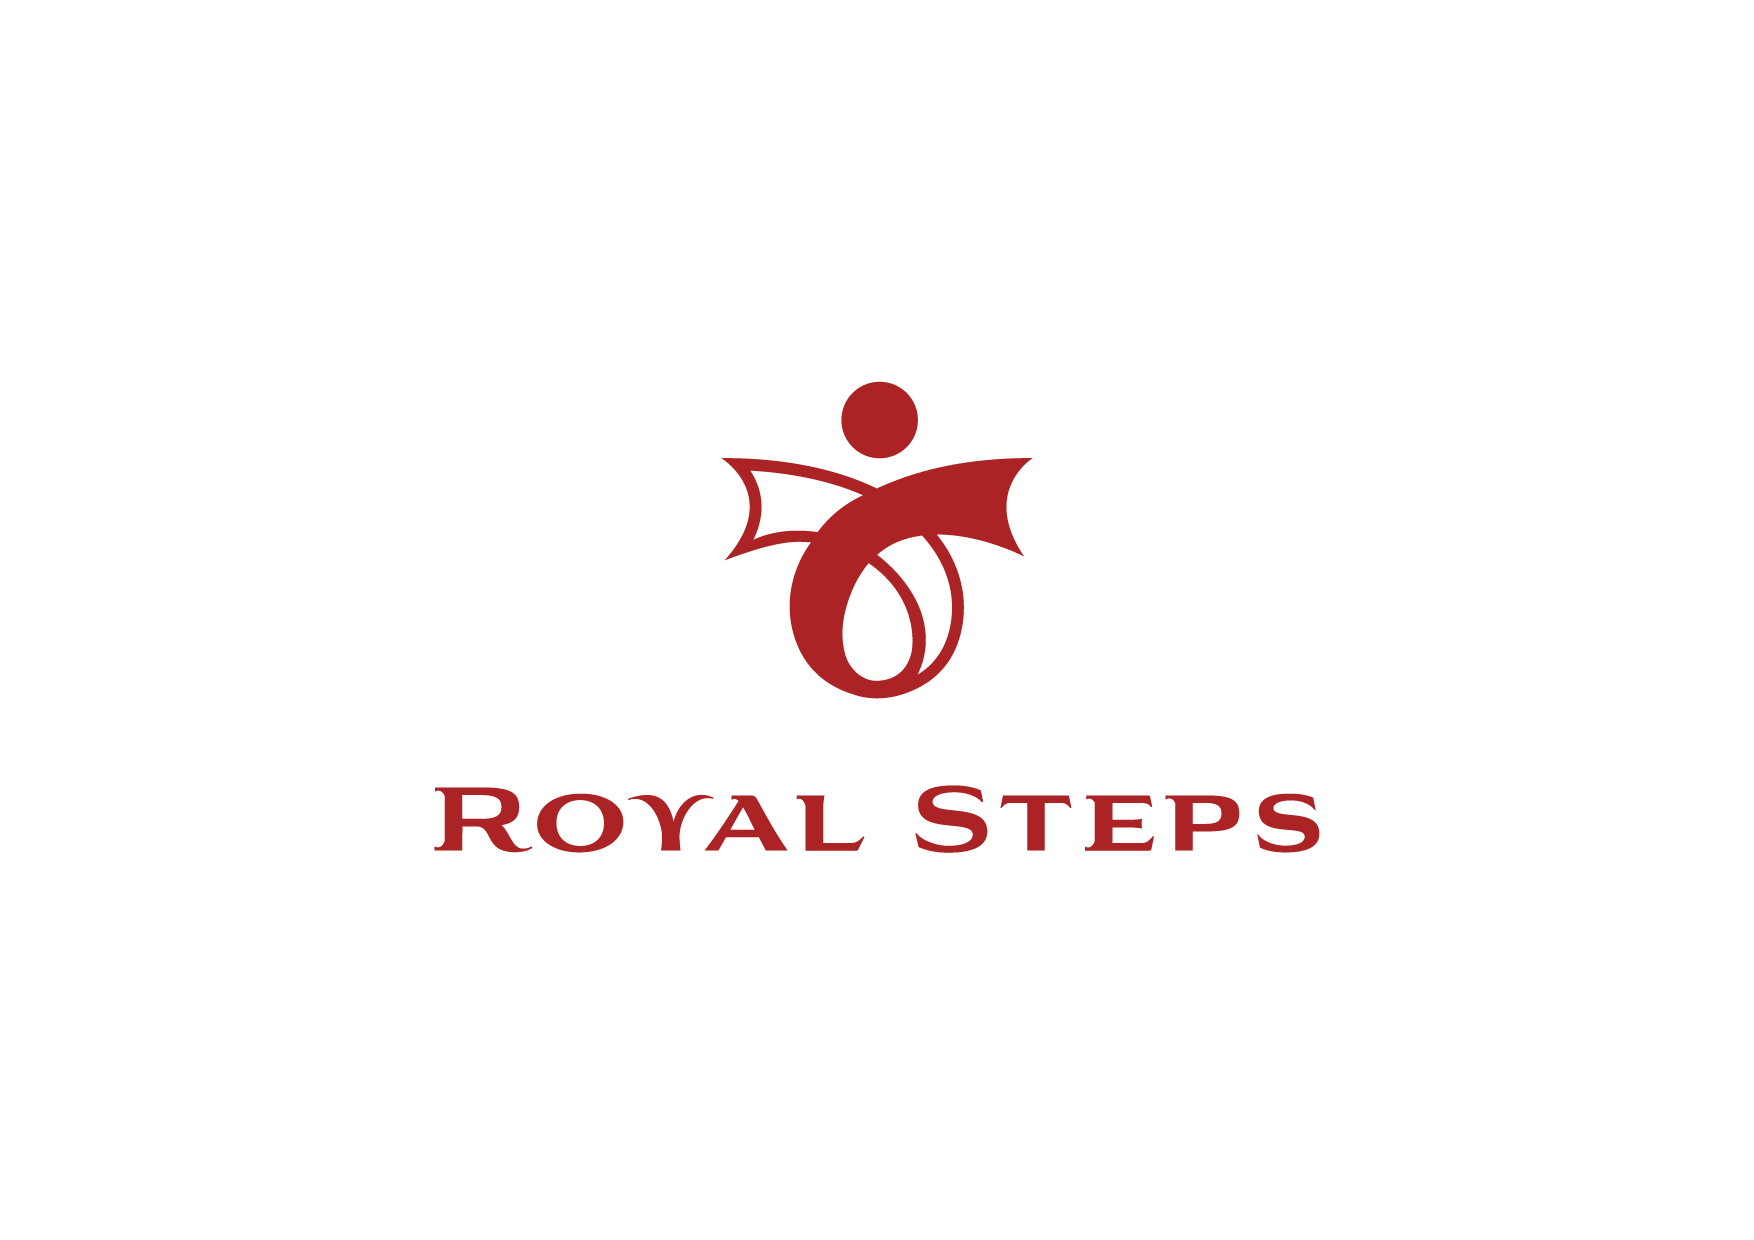 Royal Steps